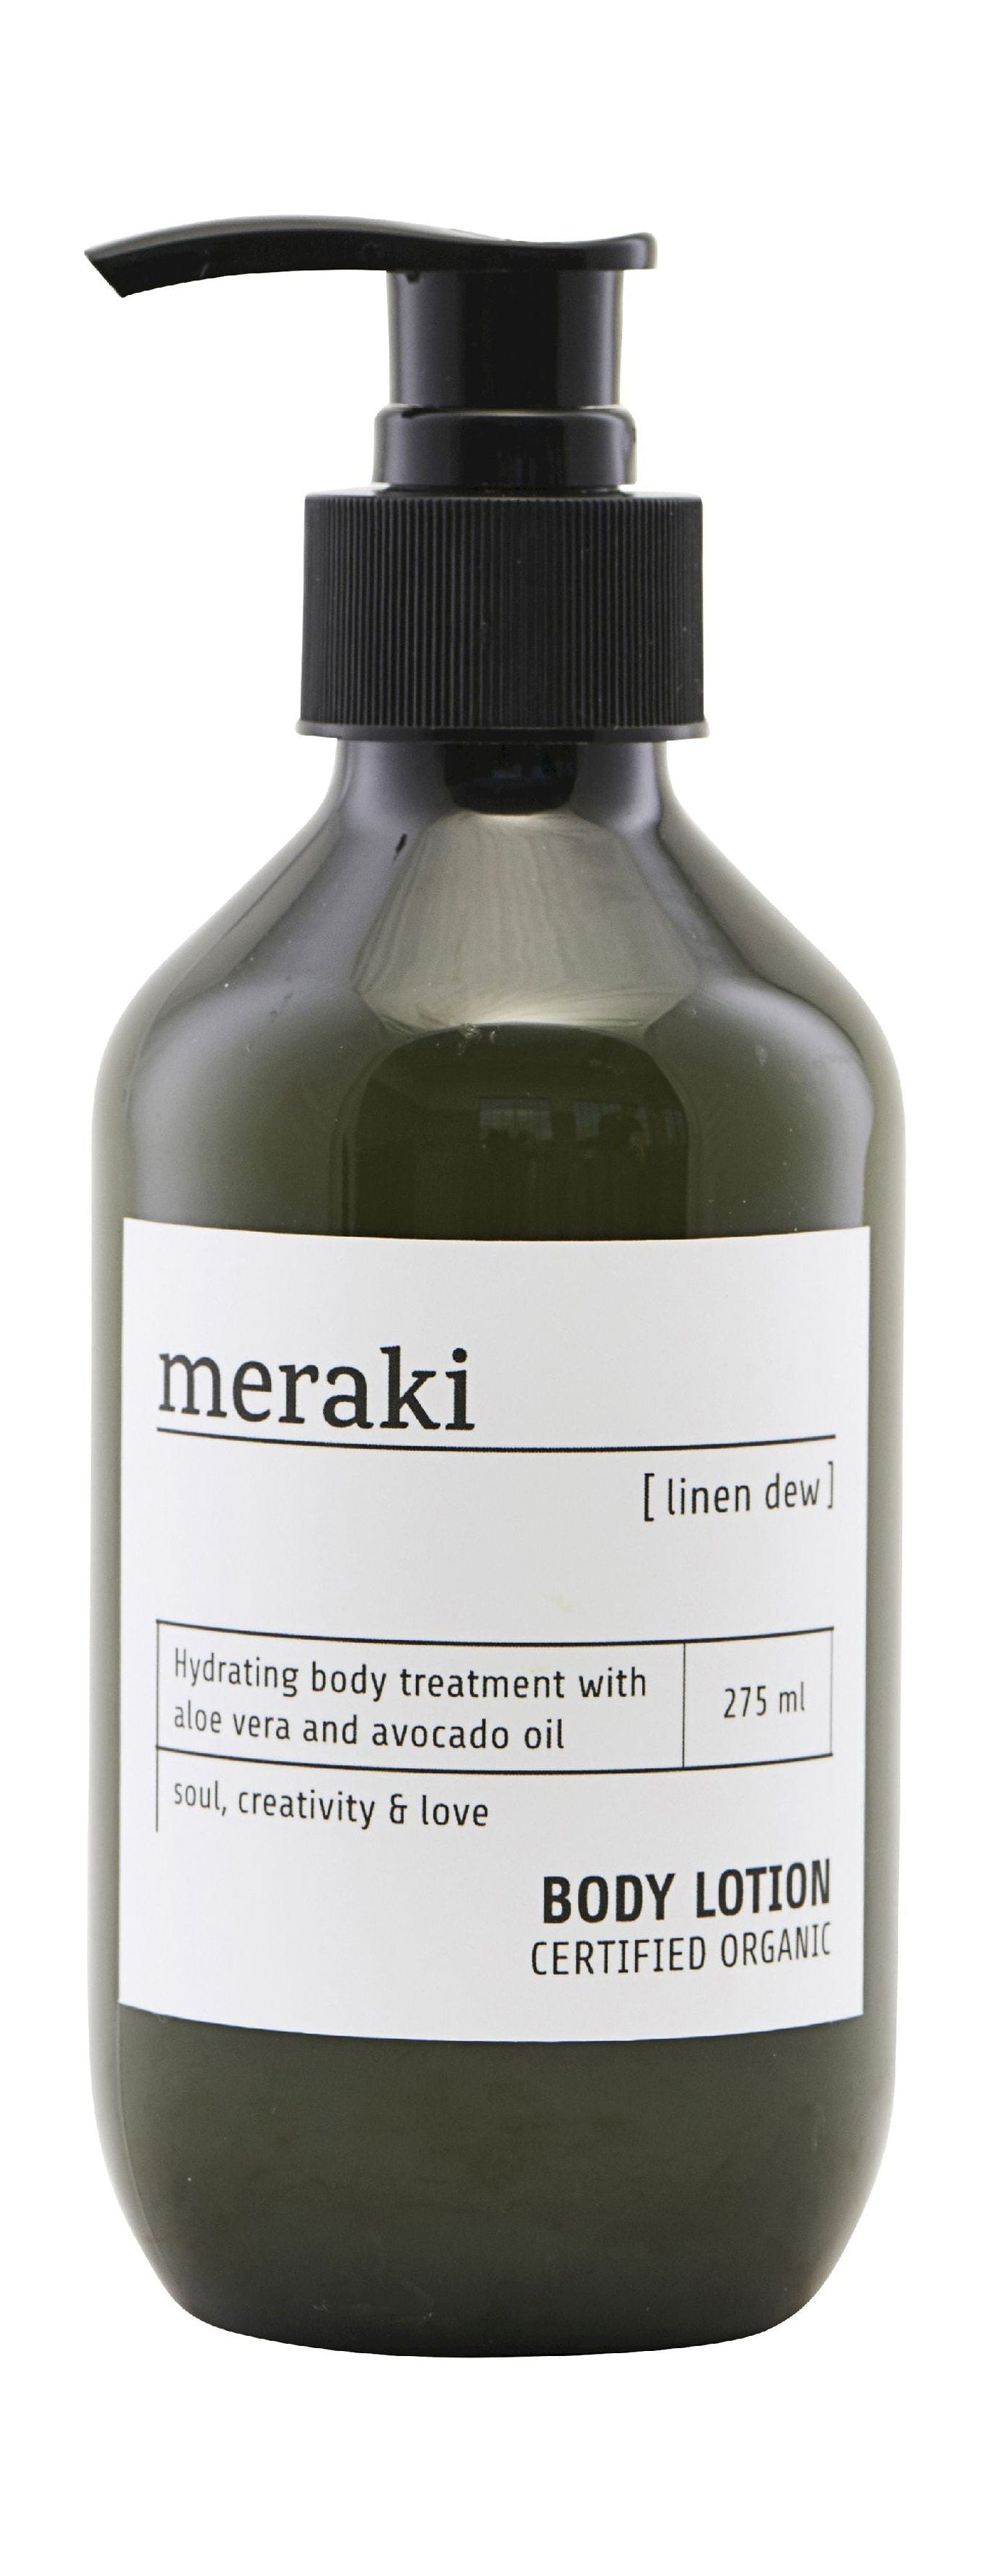 Meraki Bodylotion 275 ml, Linen Dew